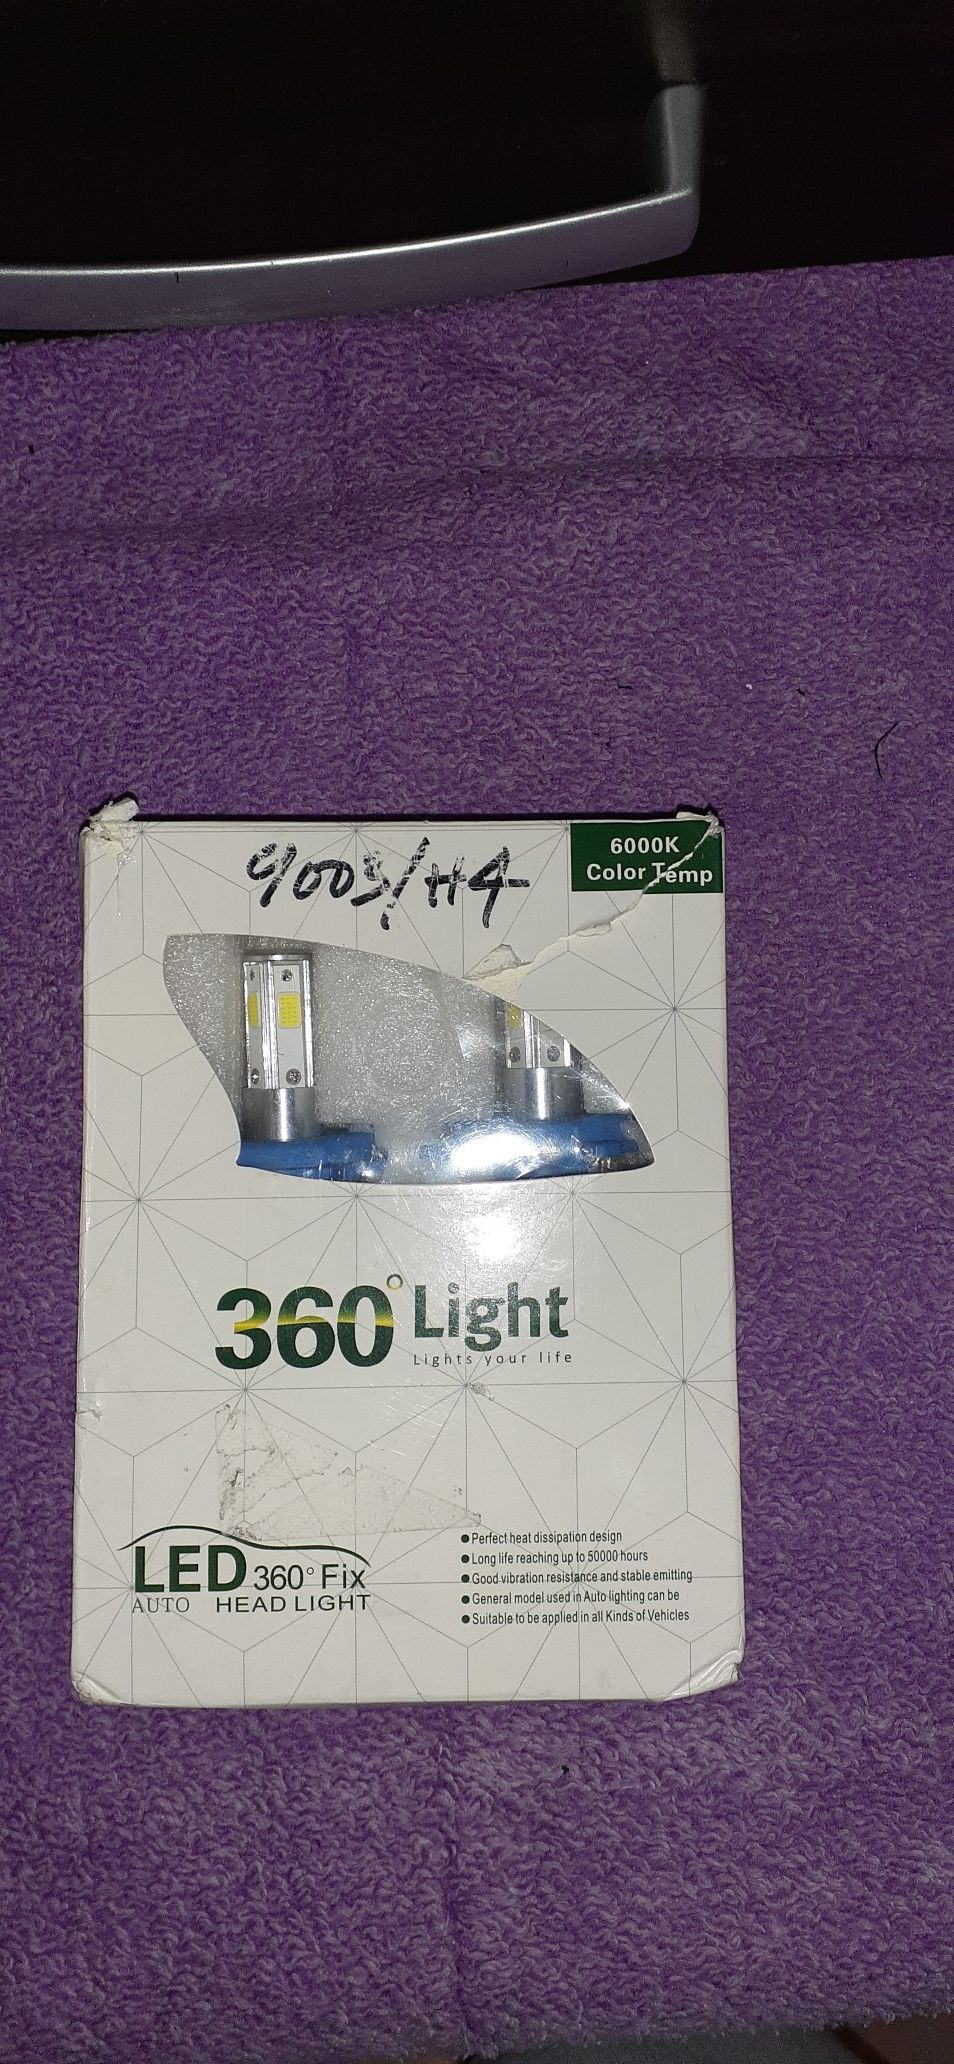 Must sell LED headlights ASAP